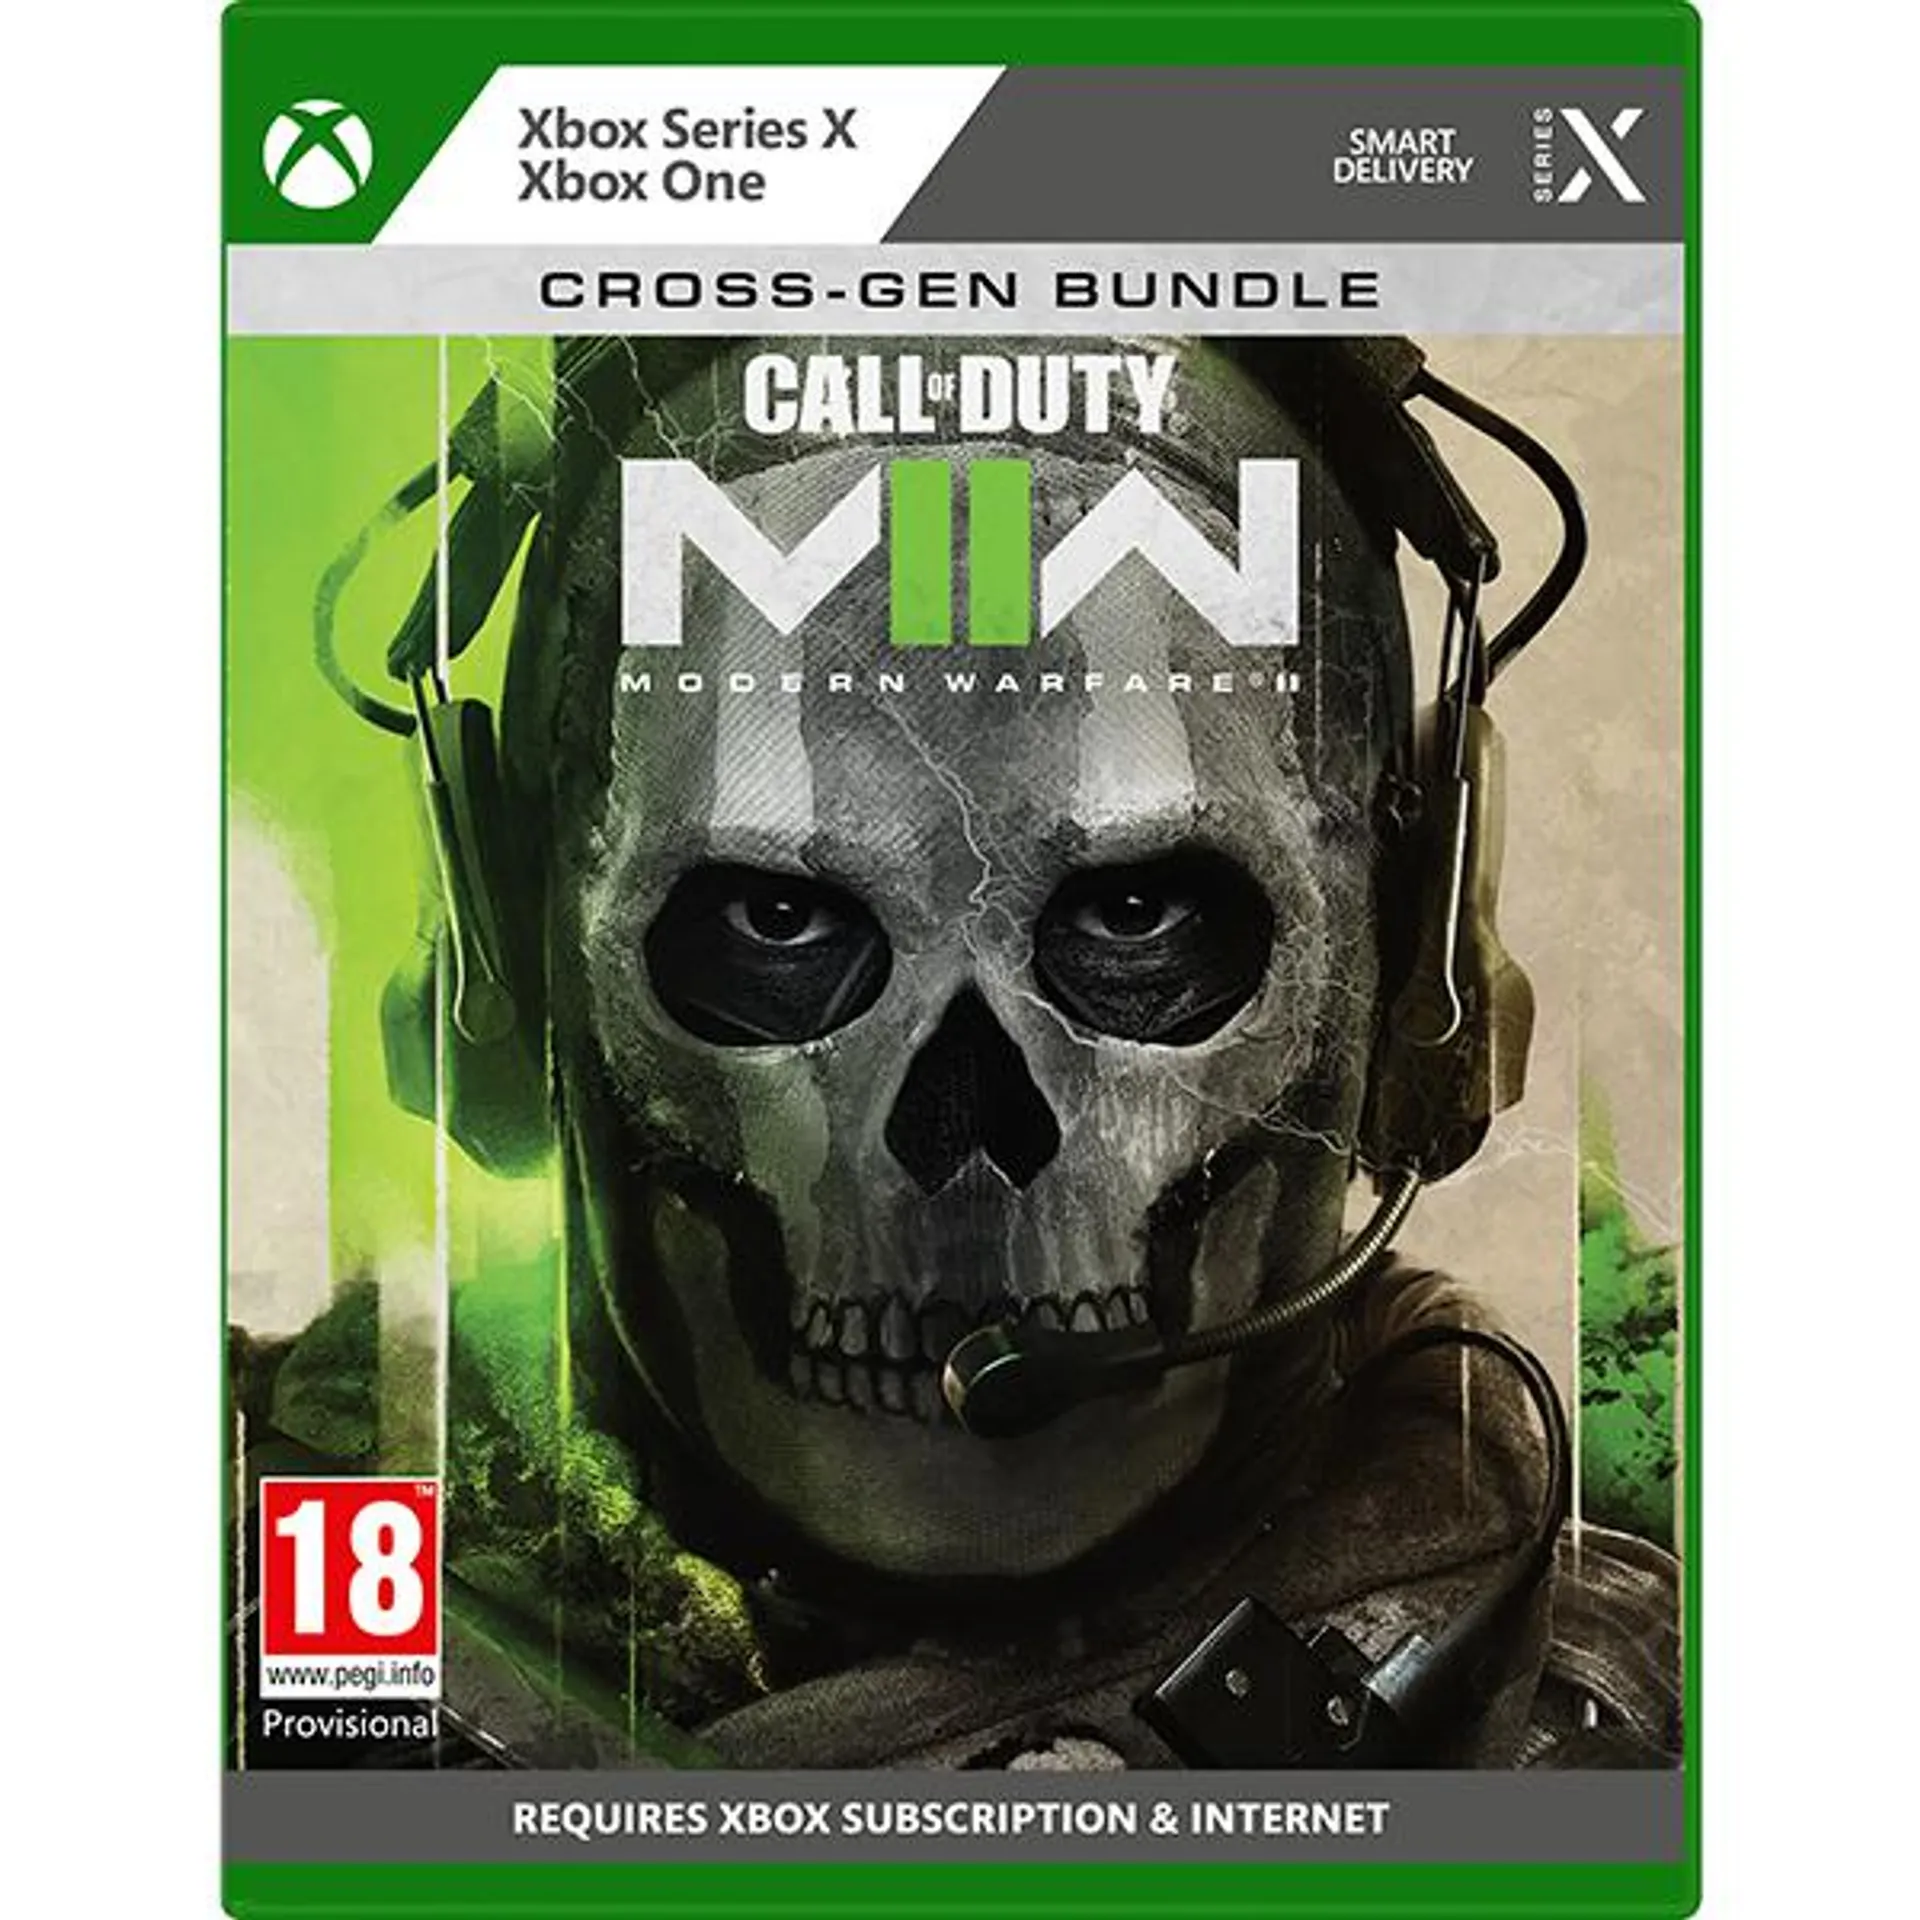 Call of Duty Modern Warfare 2 for Xbox Series X